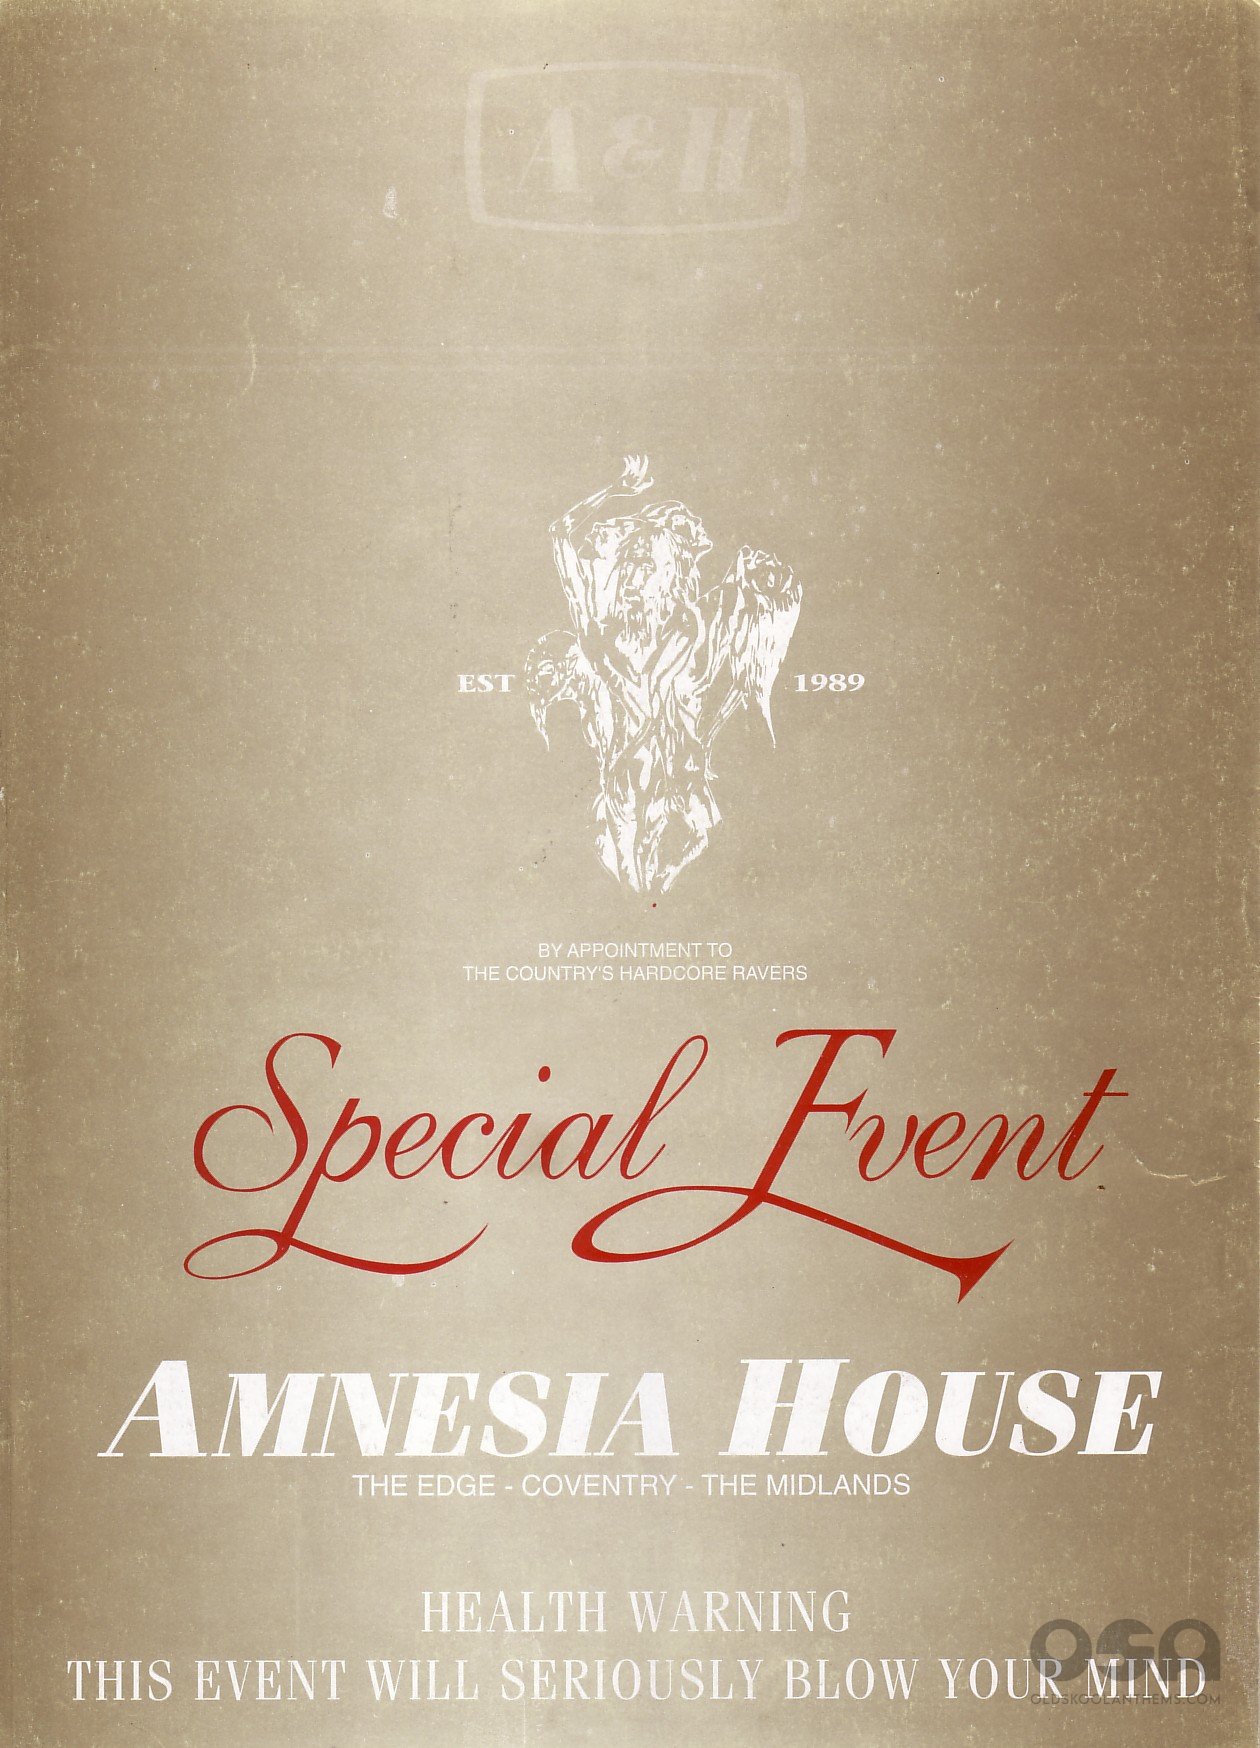 1_Special_Event_Miss_print_Amnesia_House___The_Edge_Fri_26_March_1993.jpg